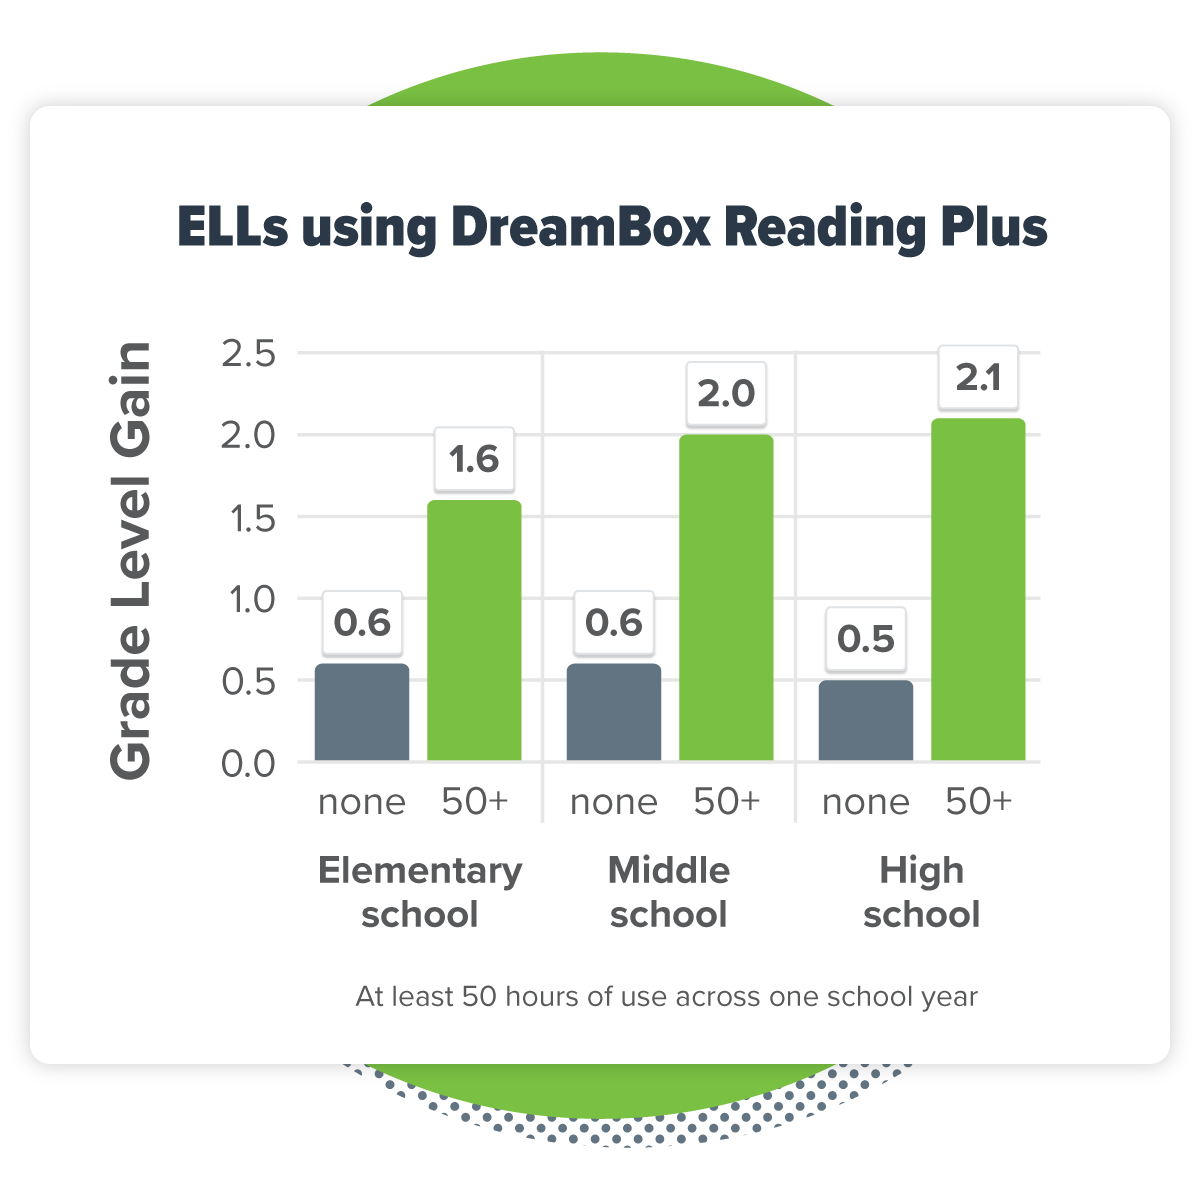 ELLs using DreamBox Reading Plus